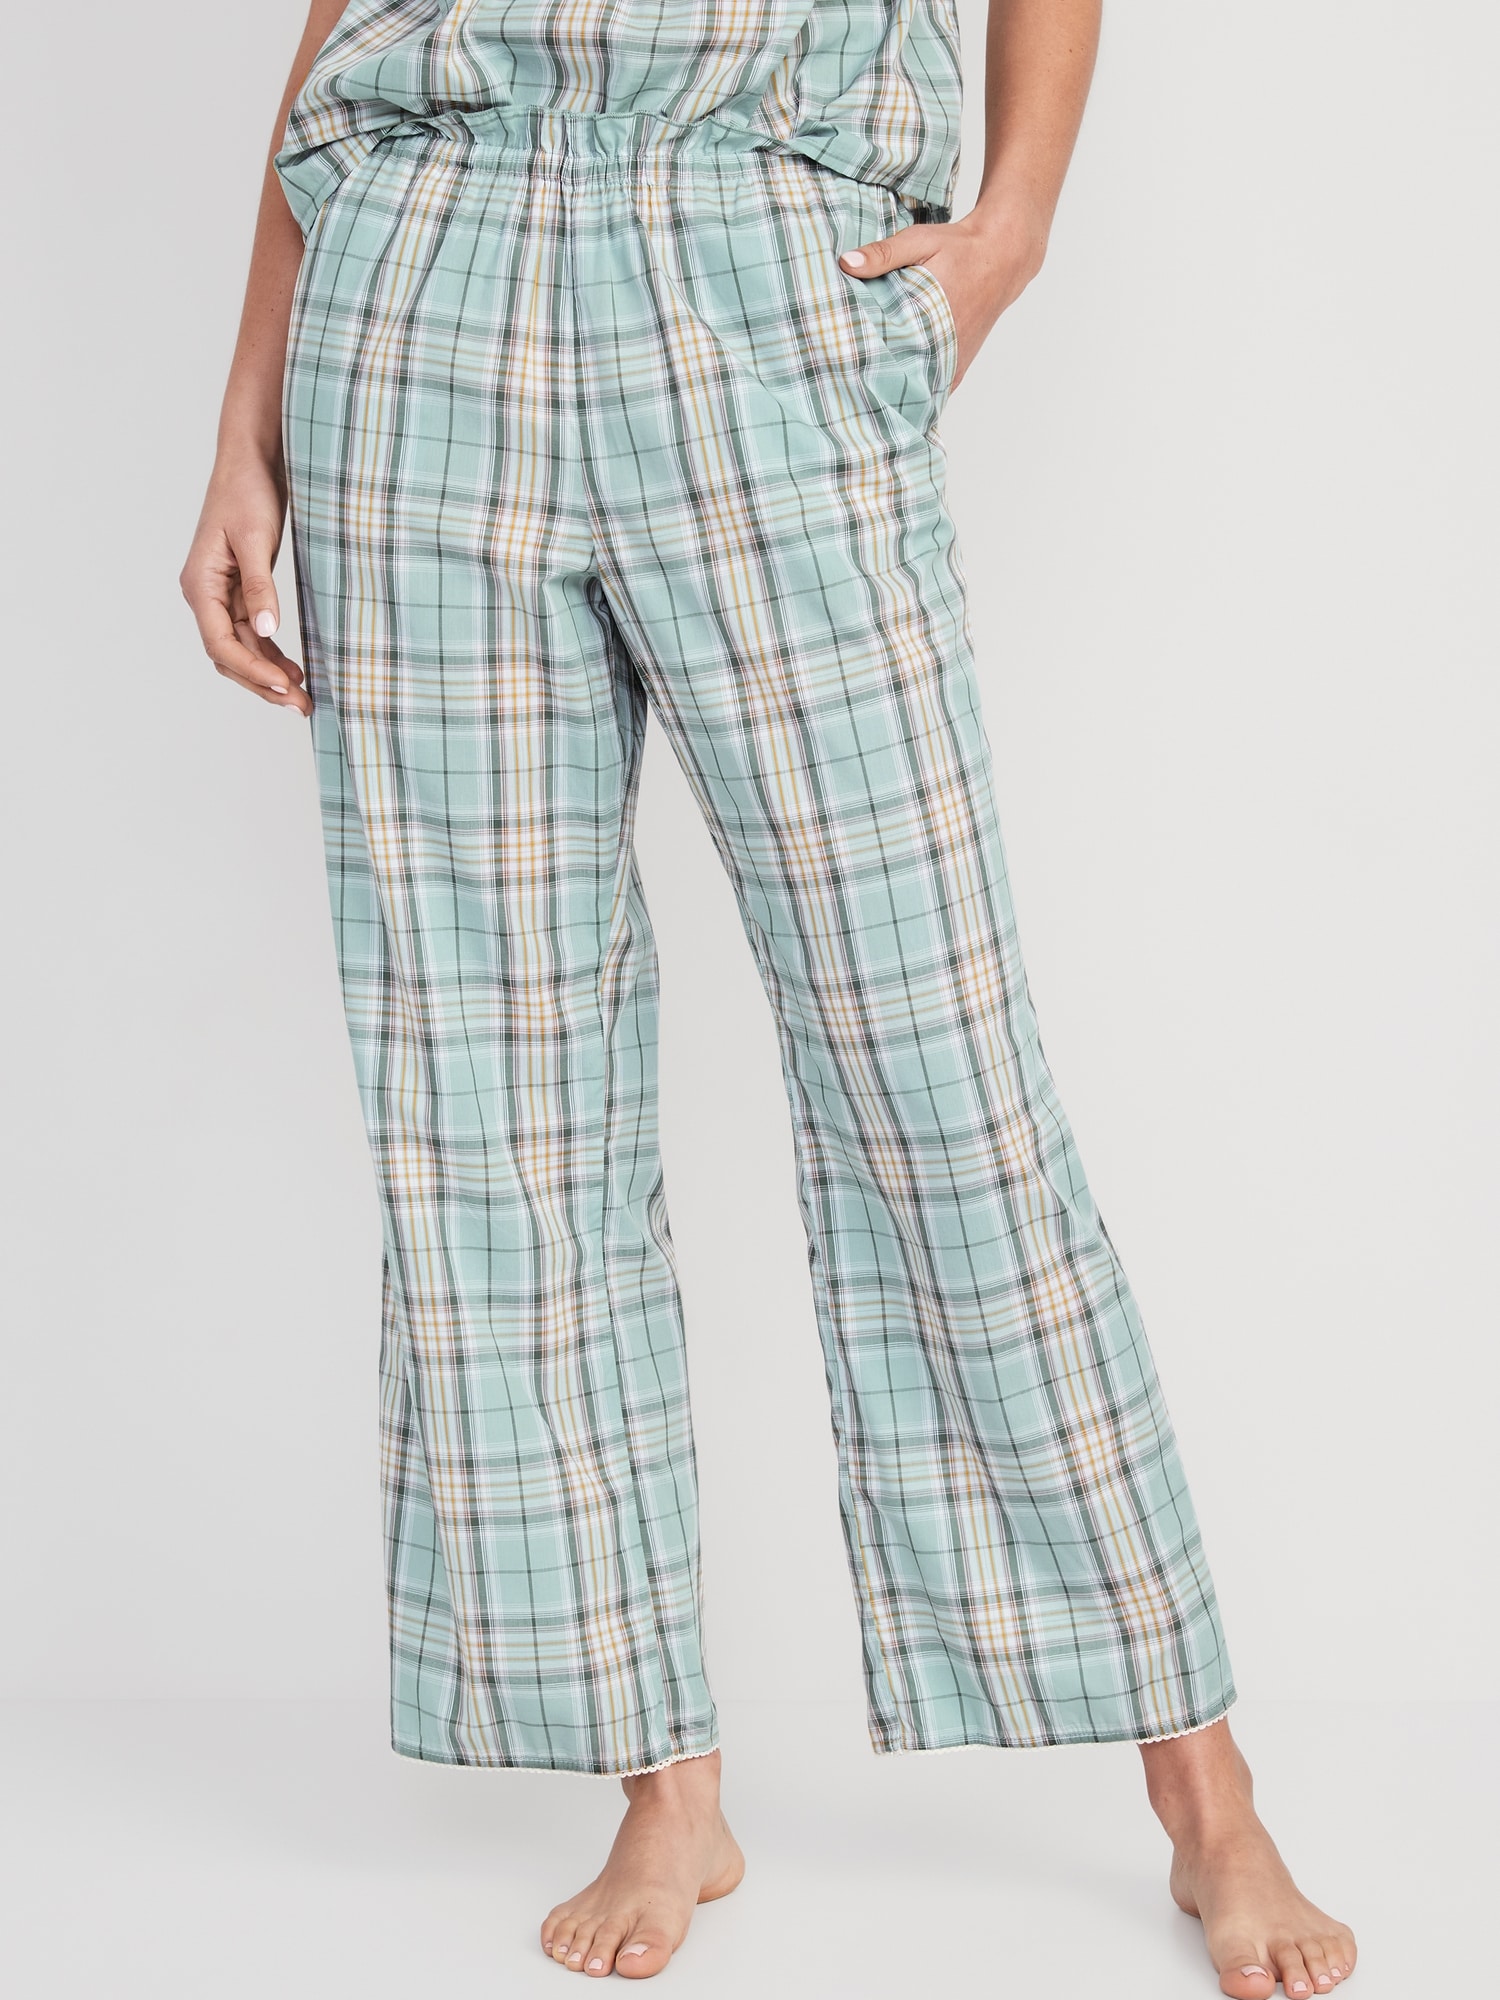 NWT Old Navy Lime Green Stripe Thermal Knit Pajama Pants Sleep Leggings  Women L 